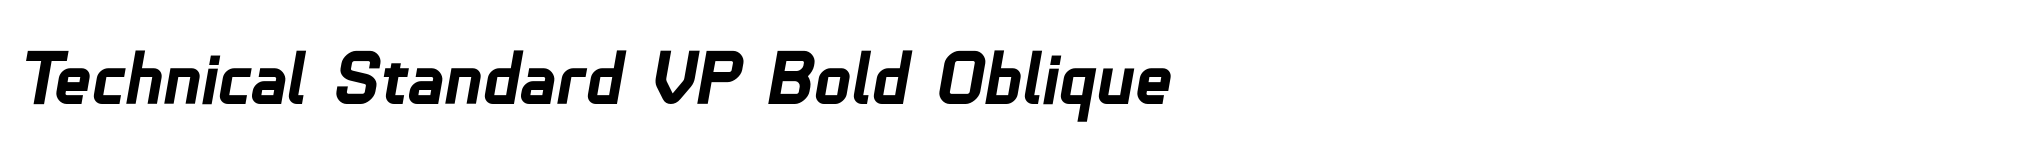 Technical Standard VP Bold Oblique image